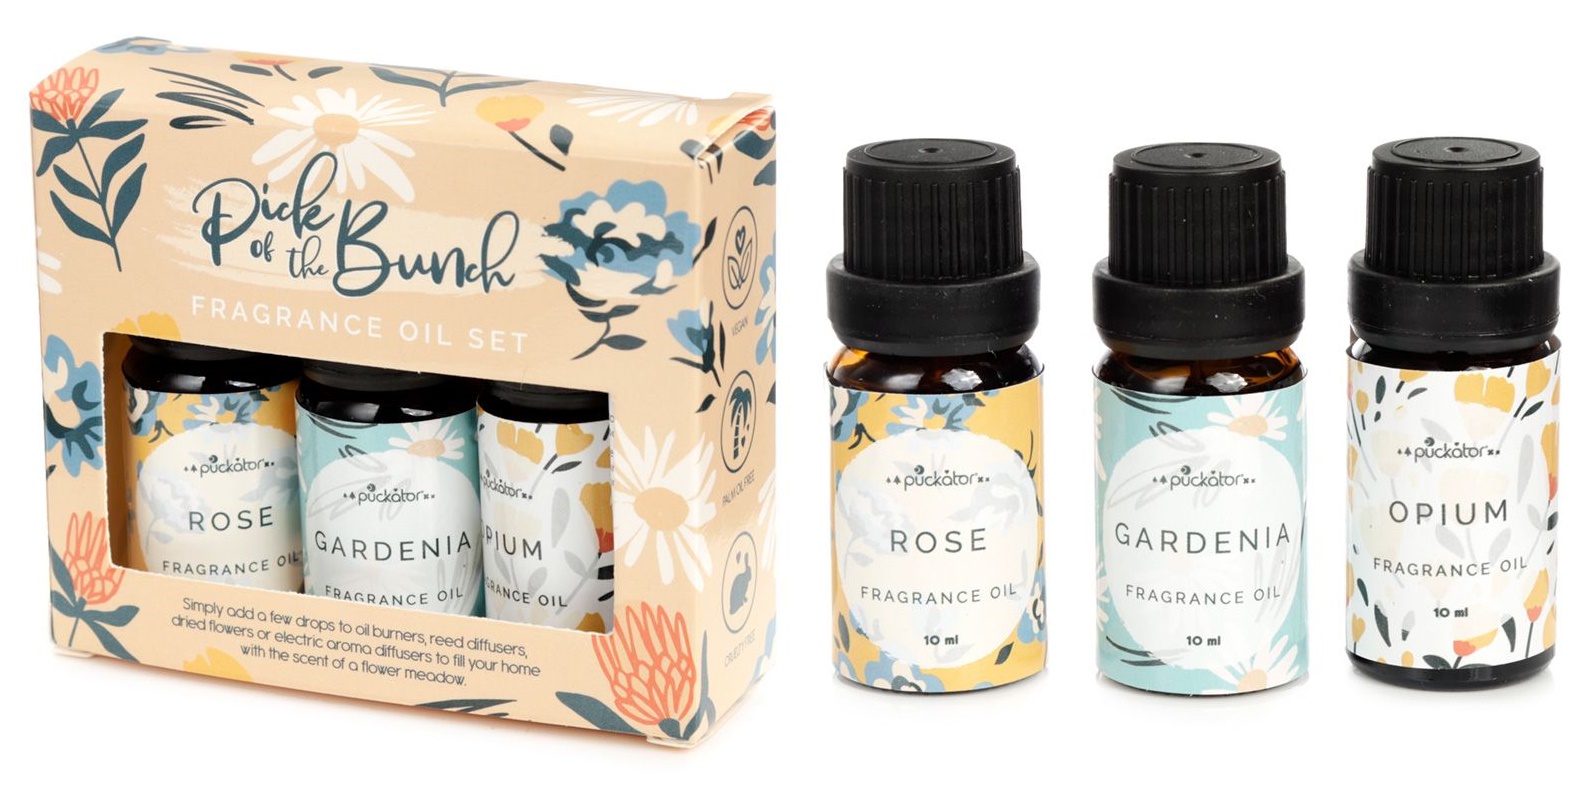 Pick of the Bunch Set of 3 Fragrance Oils - Rose, Gardenia, Opium